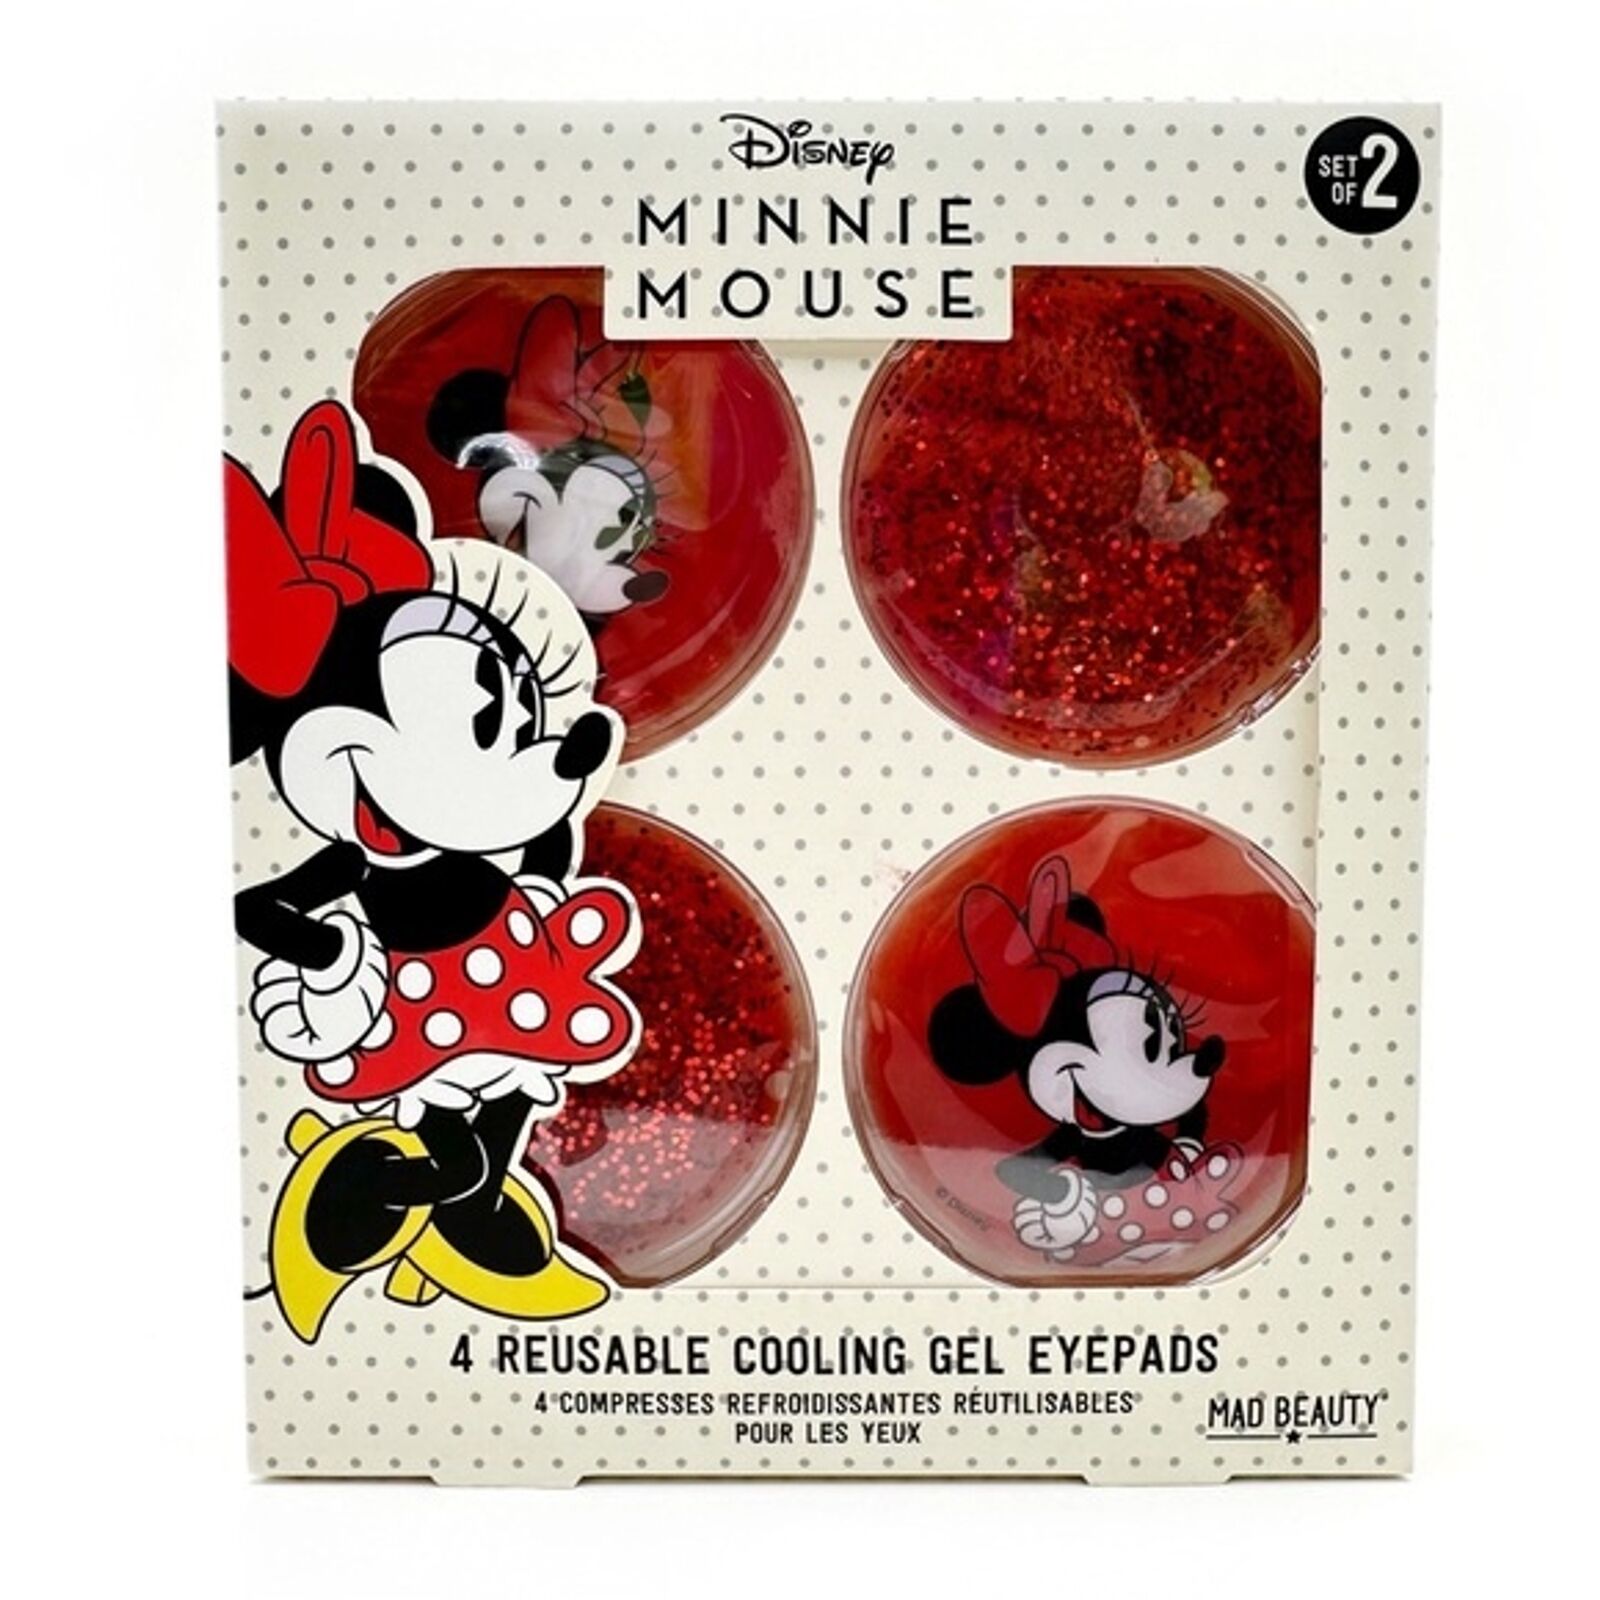 Disney Minnie Mouse Cooling Gel Eye Pads EyePads DePuff Swelling 4 Pack